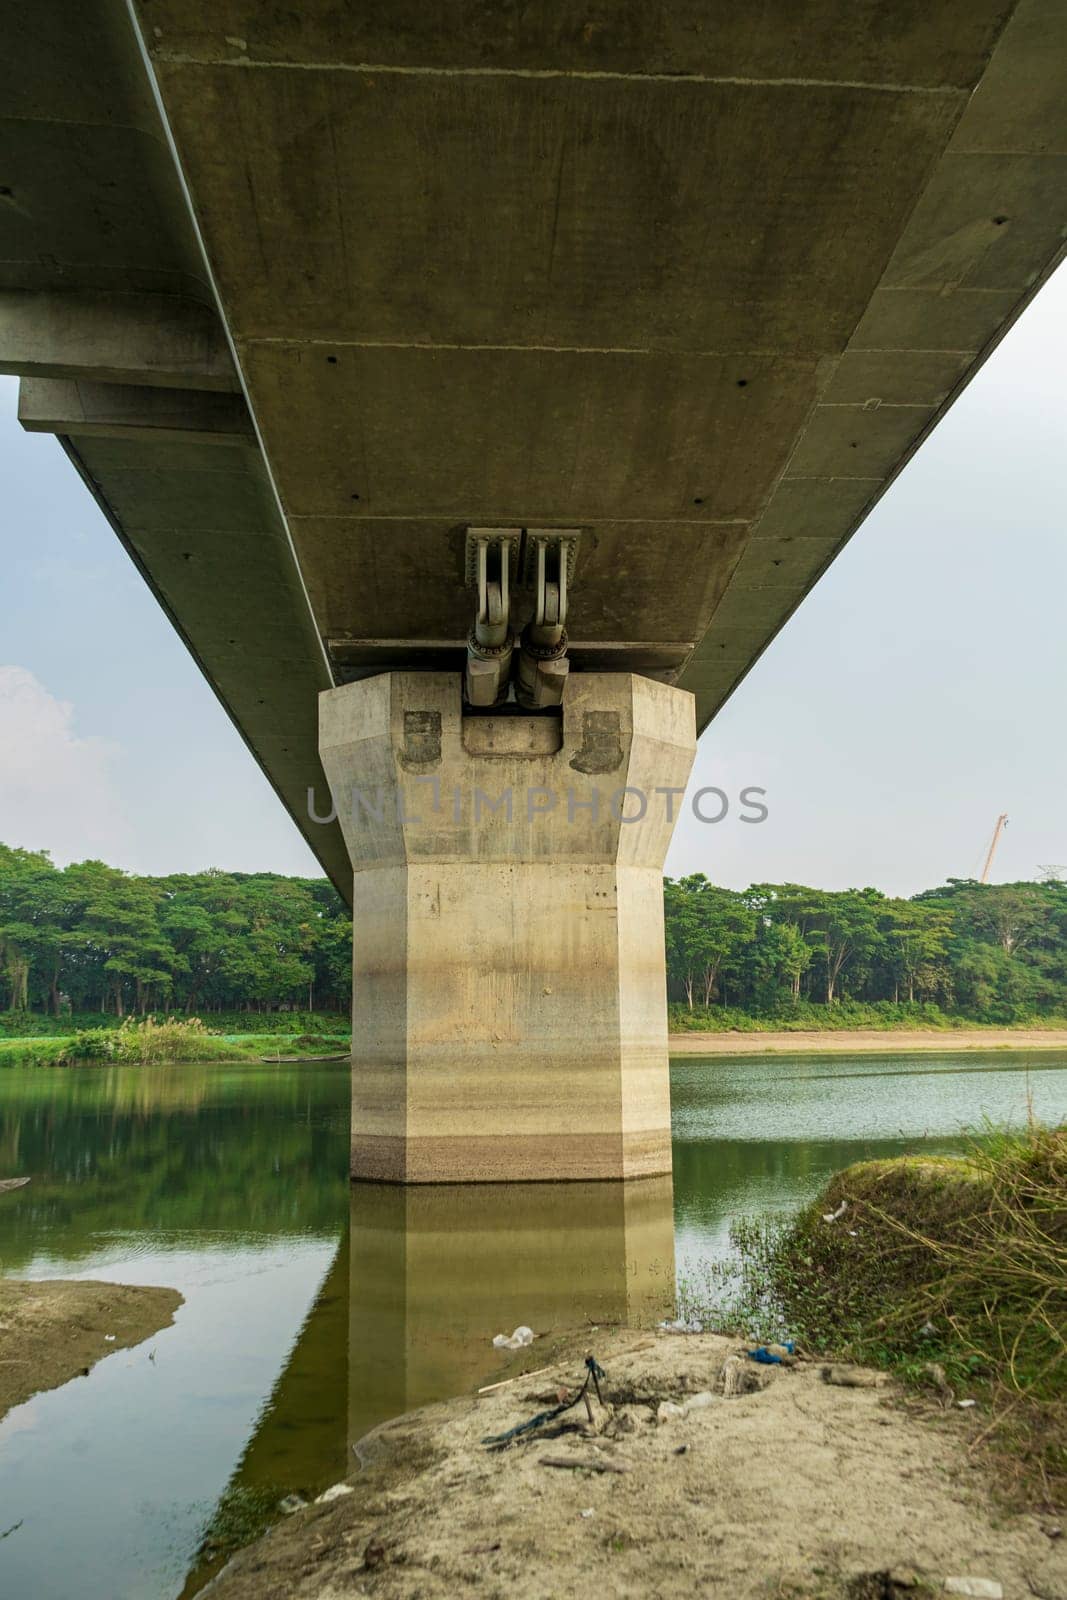 Reinforced concrete support for a road bridge